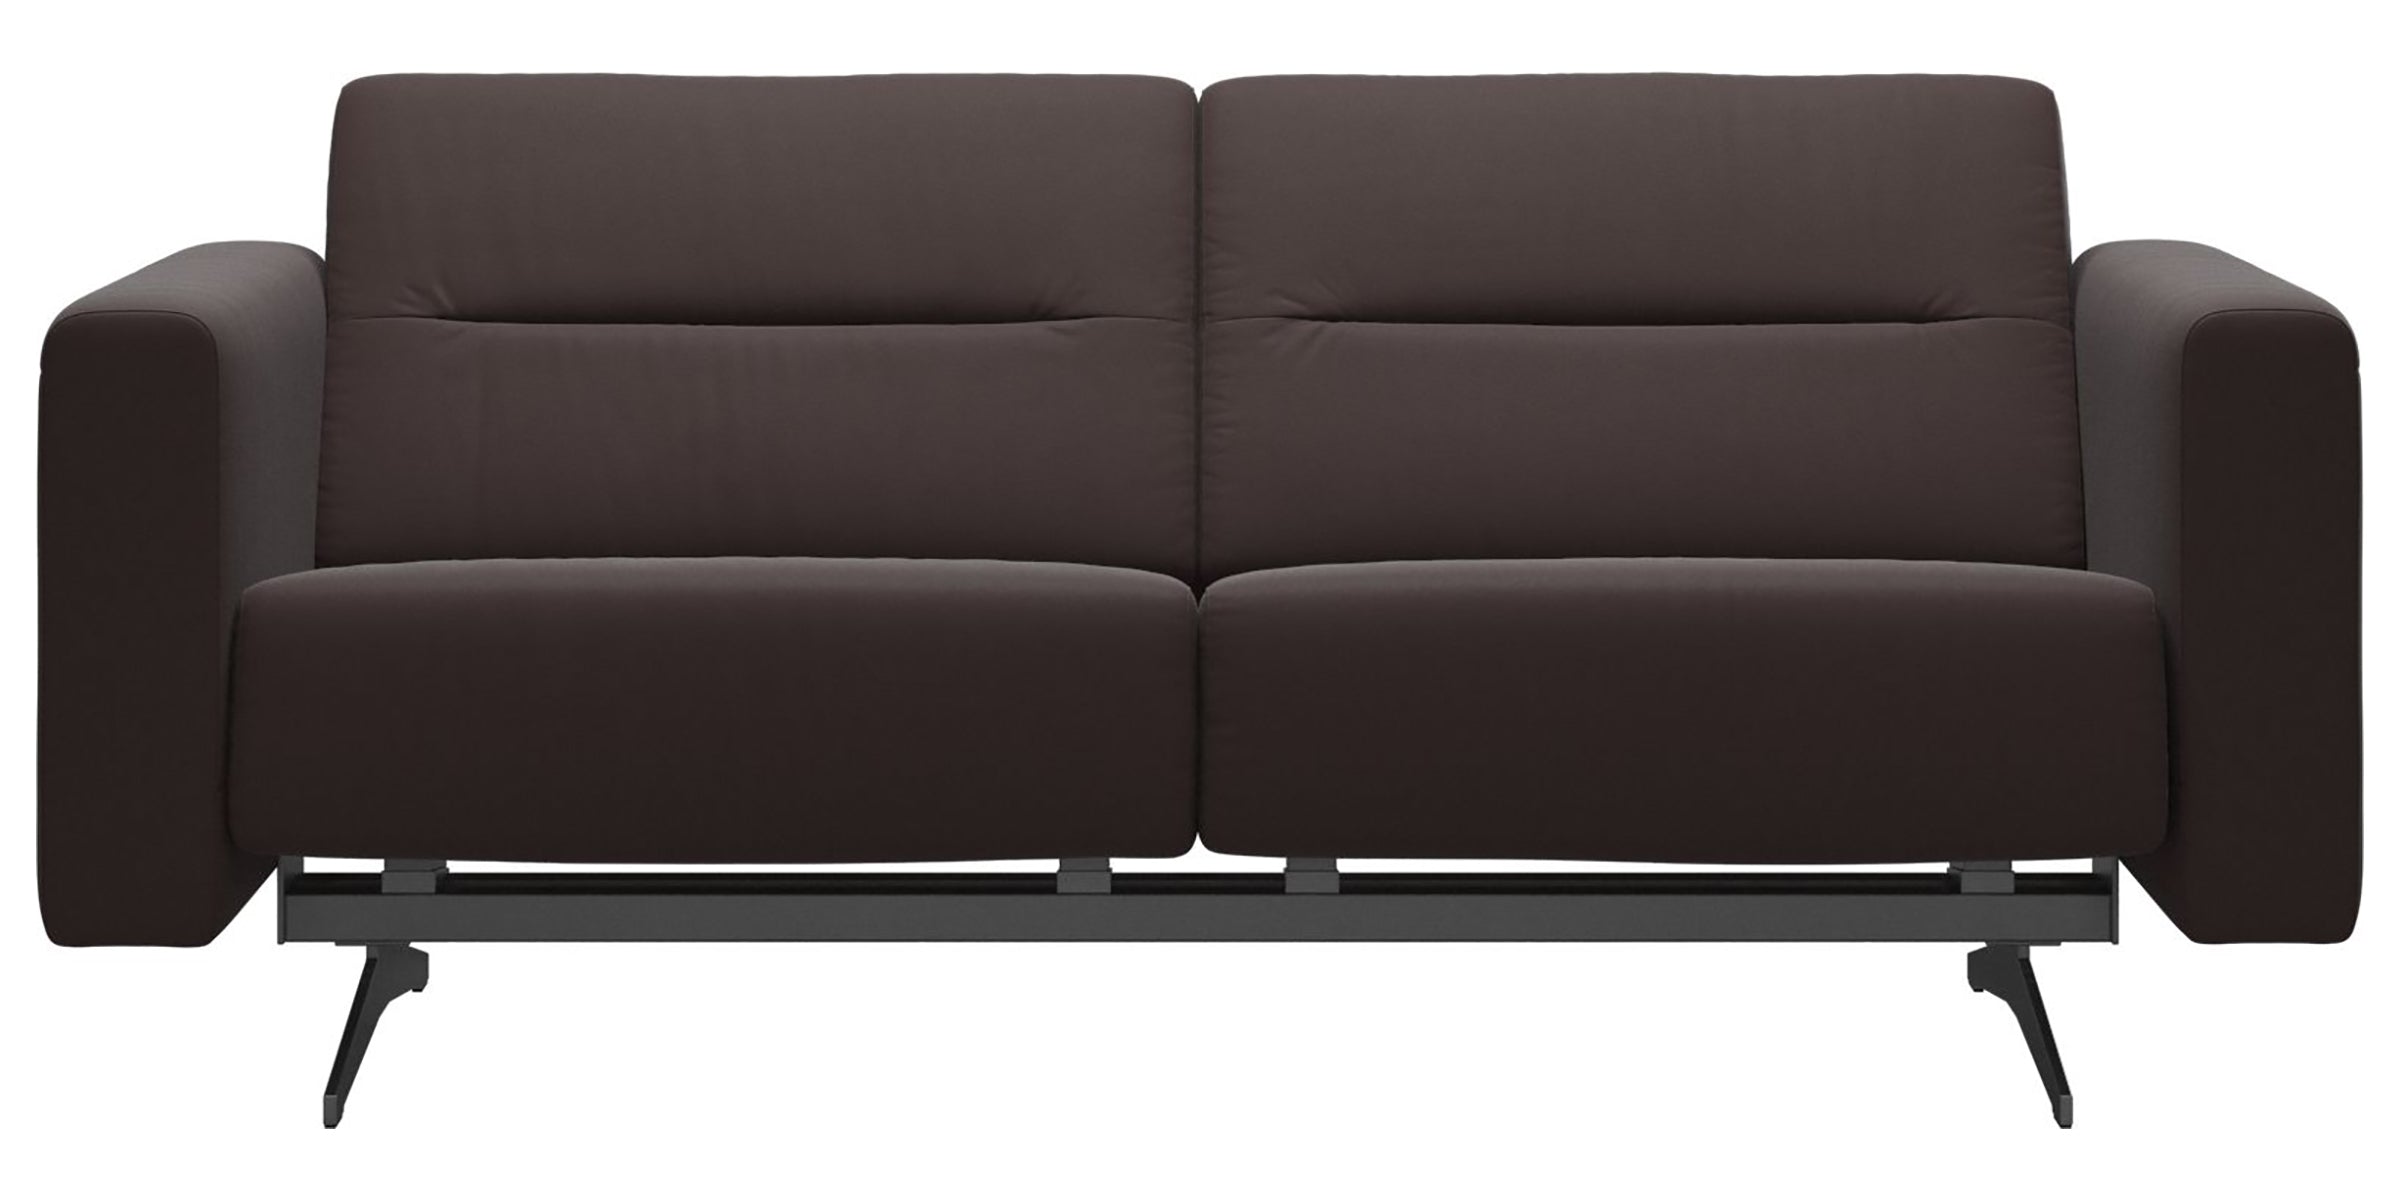 Paloma Leather Chocolate & Chrome Base | Stressless Stella 2-Seater Sofa with S2 Arm | Valley Ridge Furniture